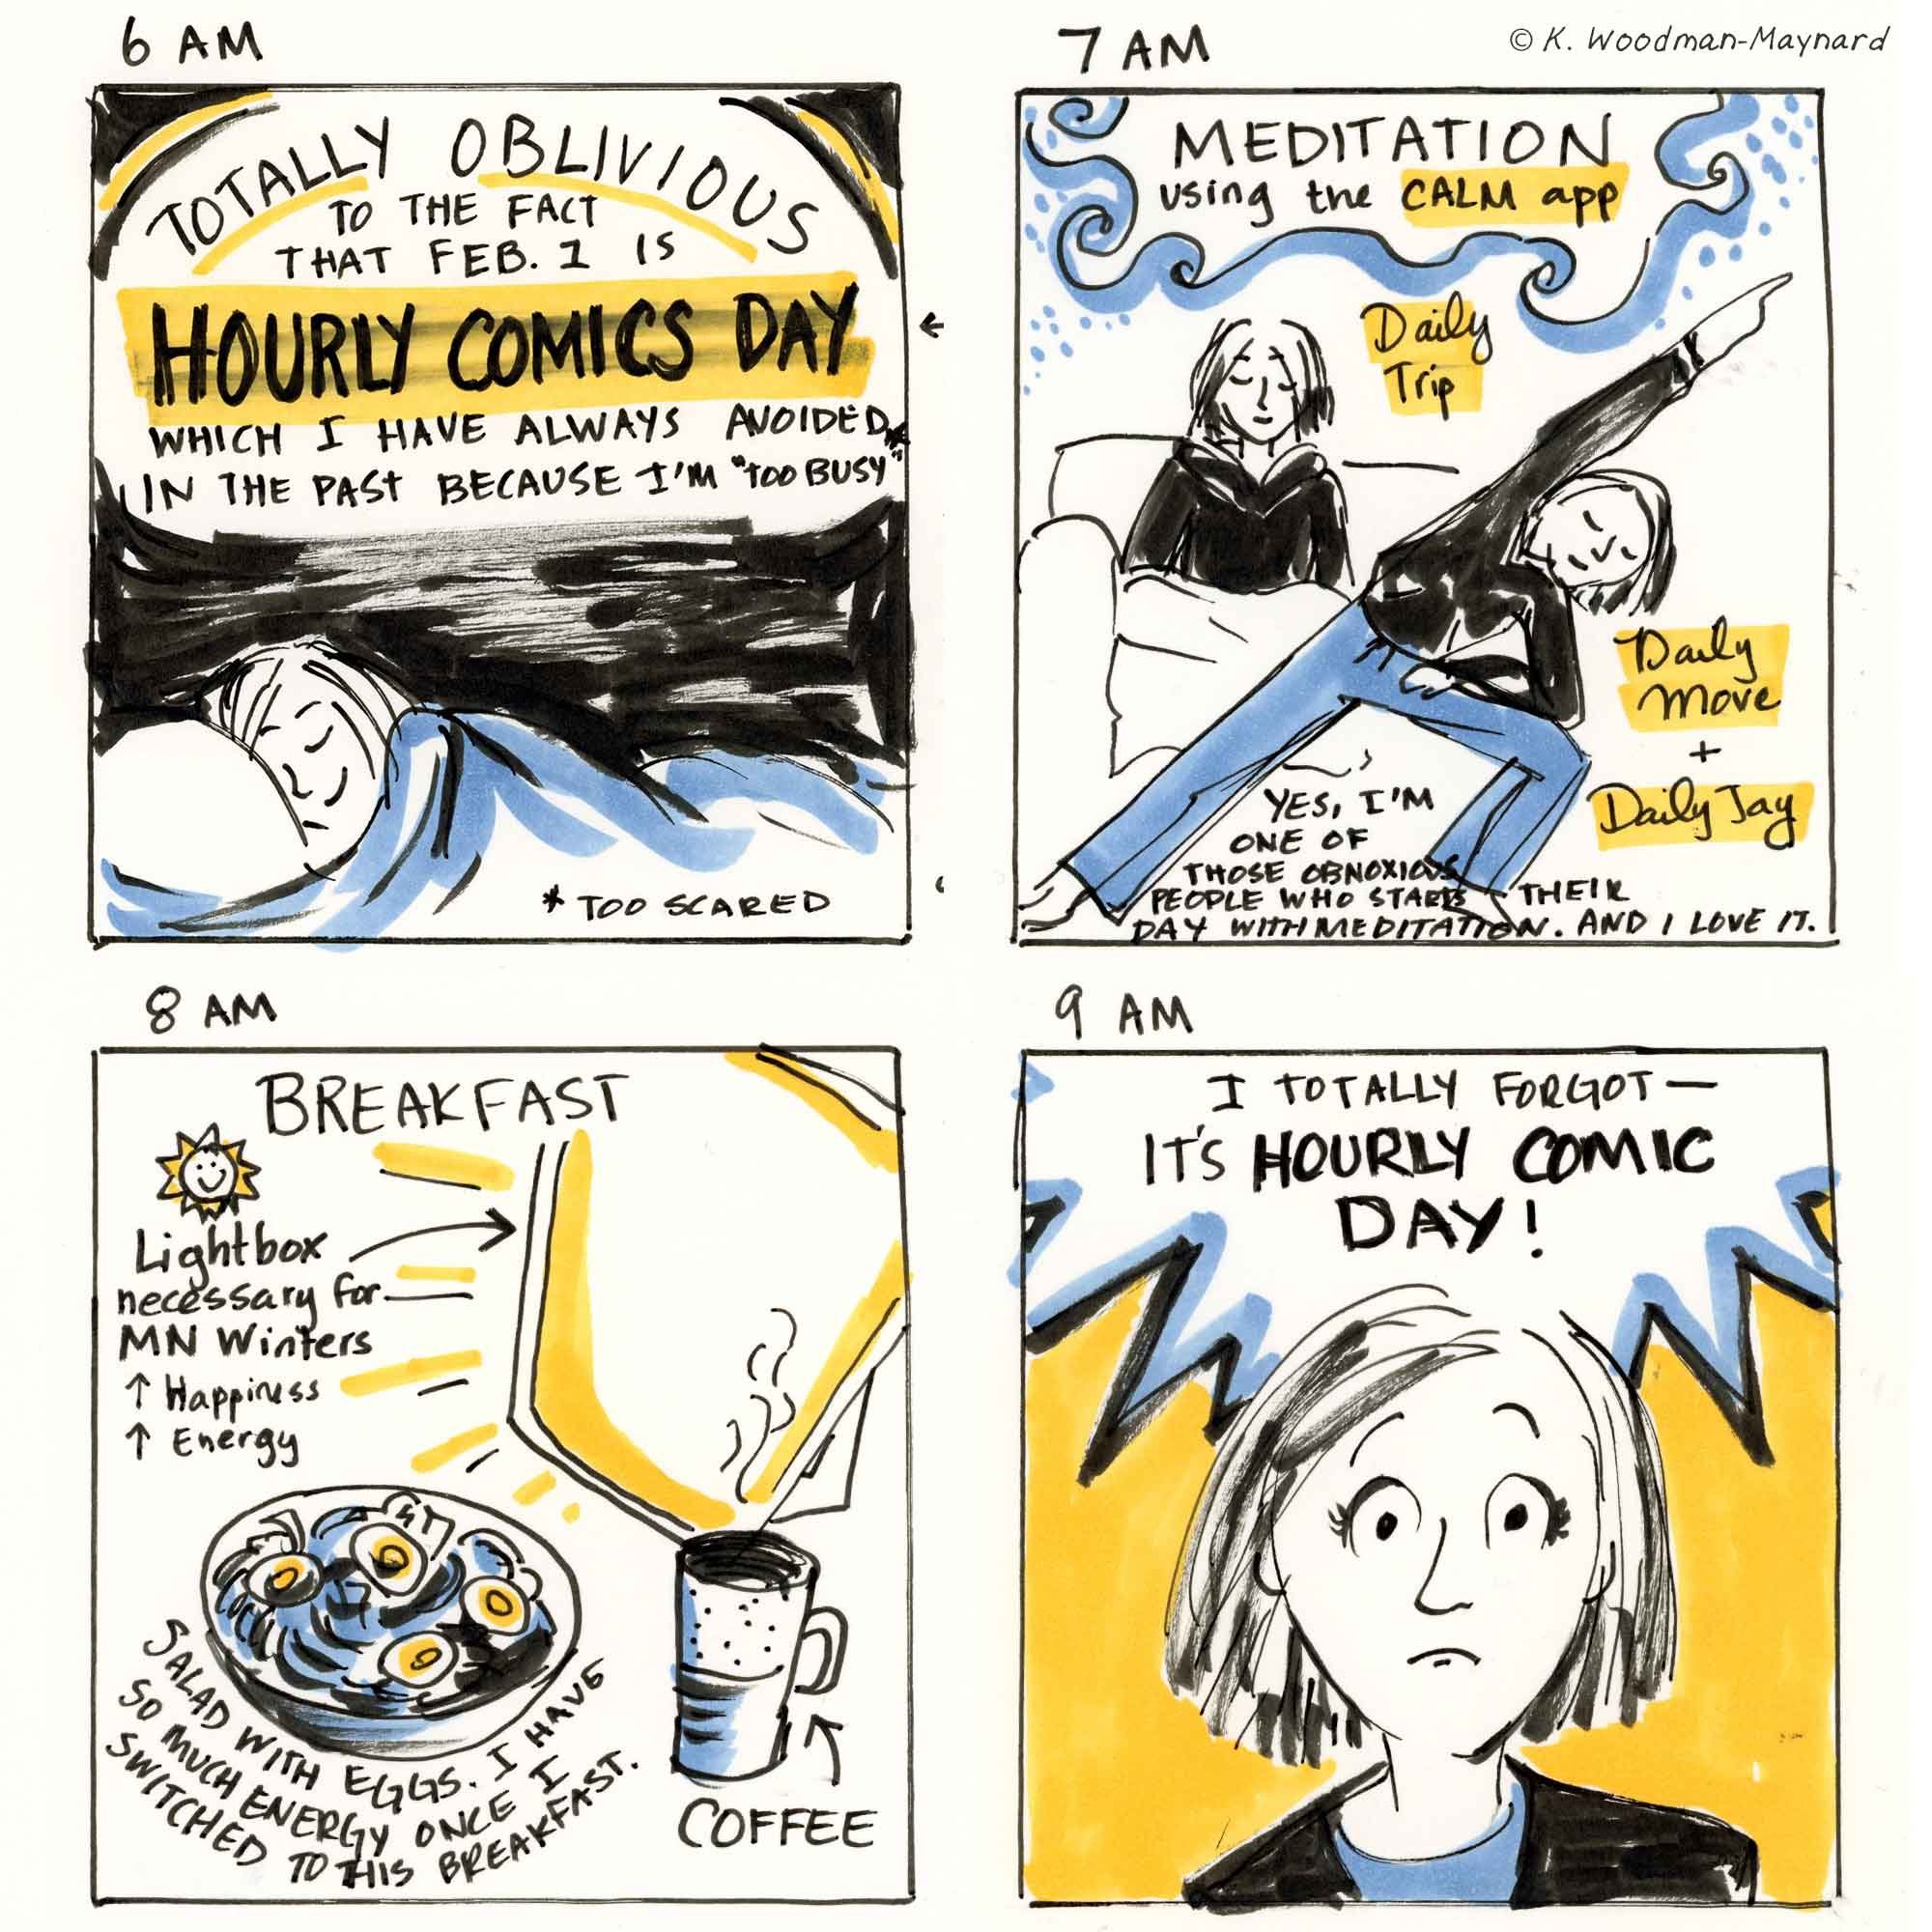  Hourly Comic Day in 2022, by graphic novelist K. Woodman-Maynard. 